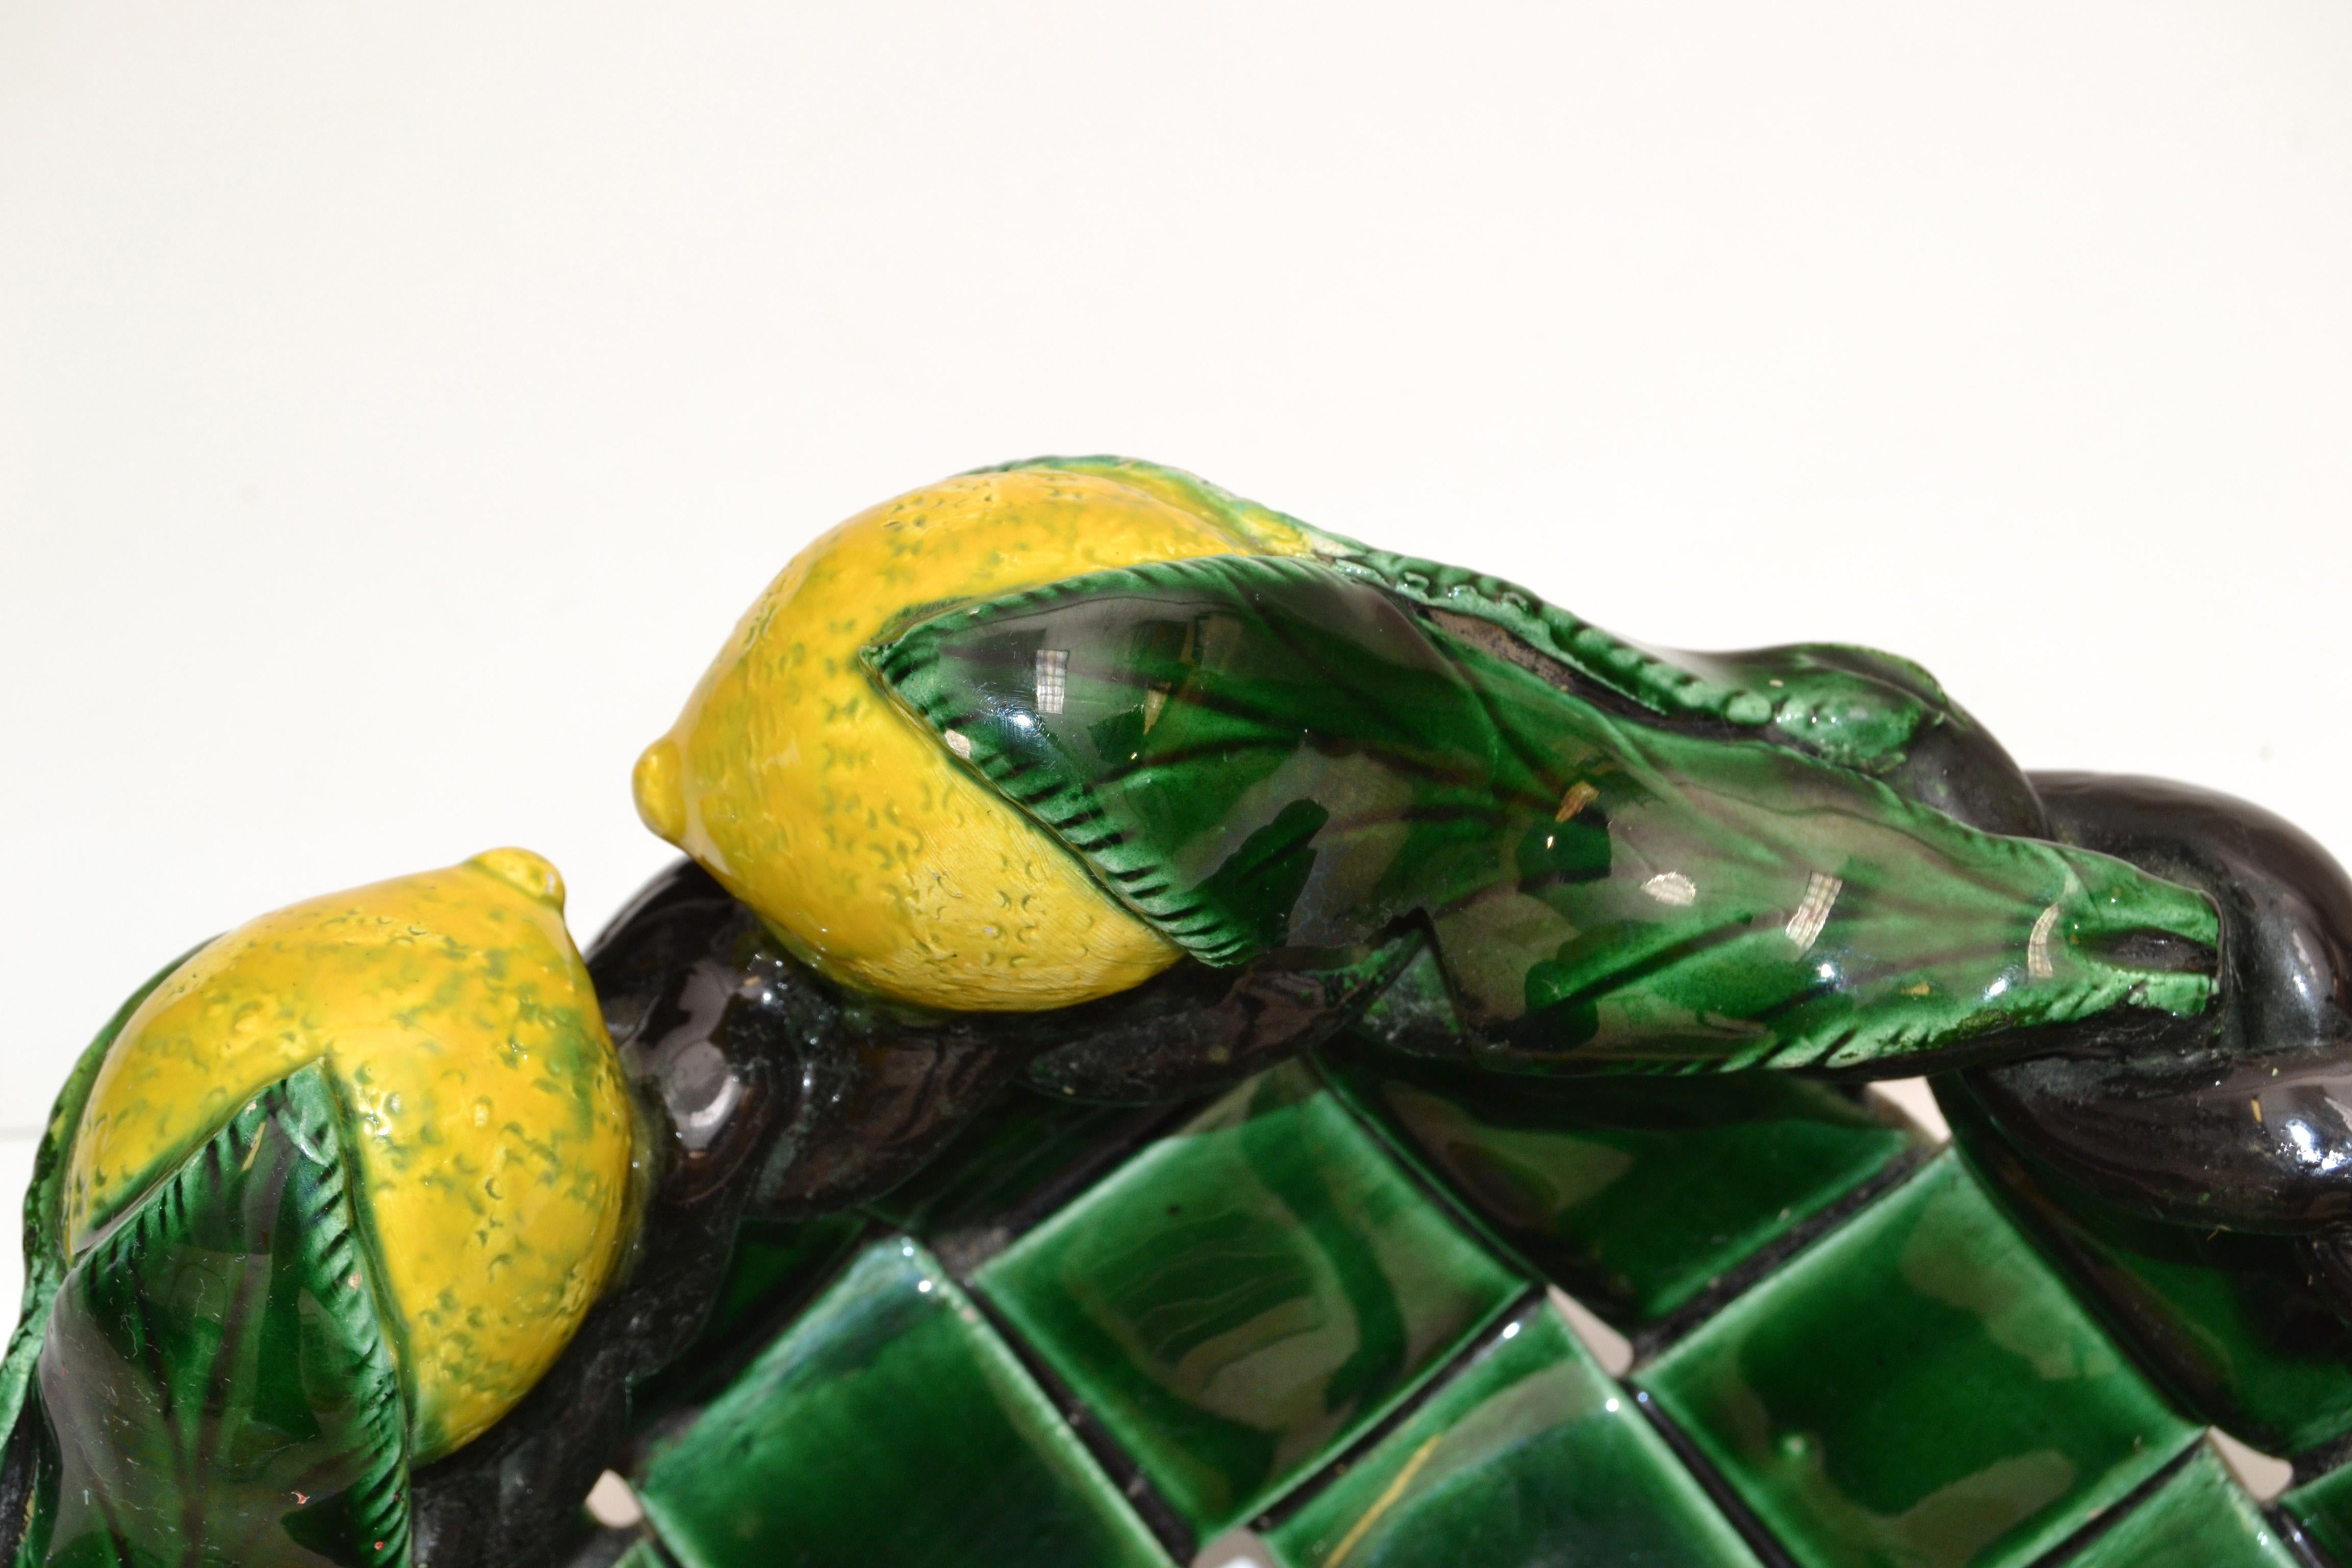 Marked Vallauris France Ceramic Lemon Basket Green & Yellow Mid-Century Modern For Sale 4